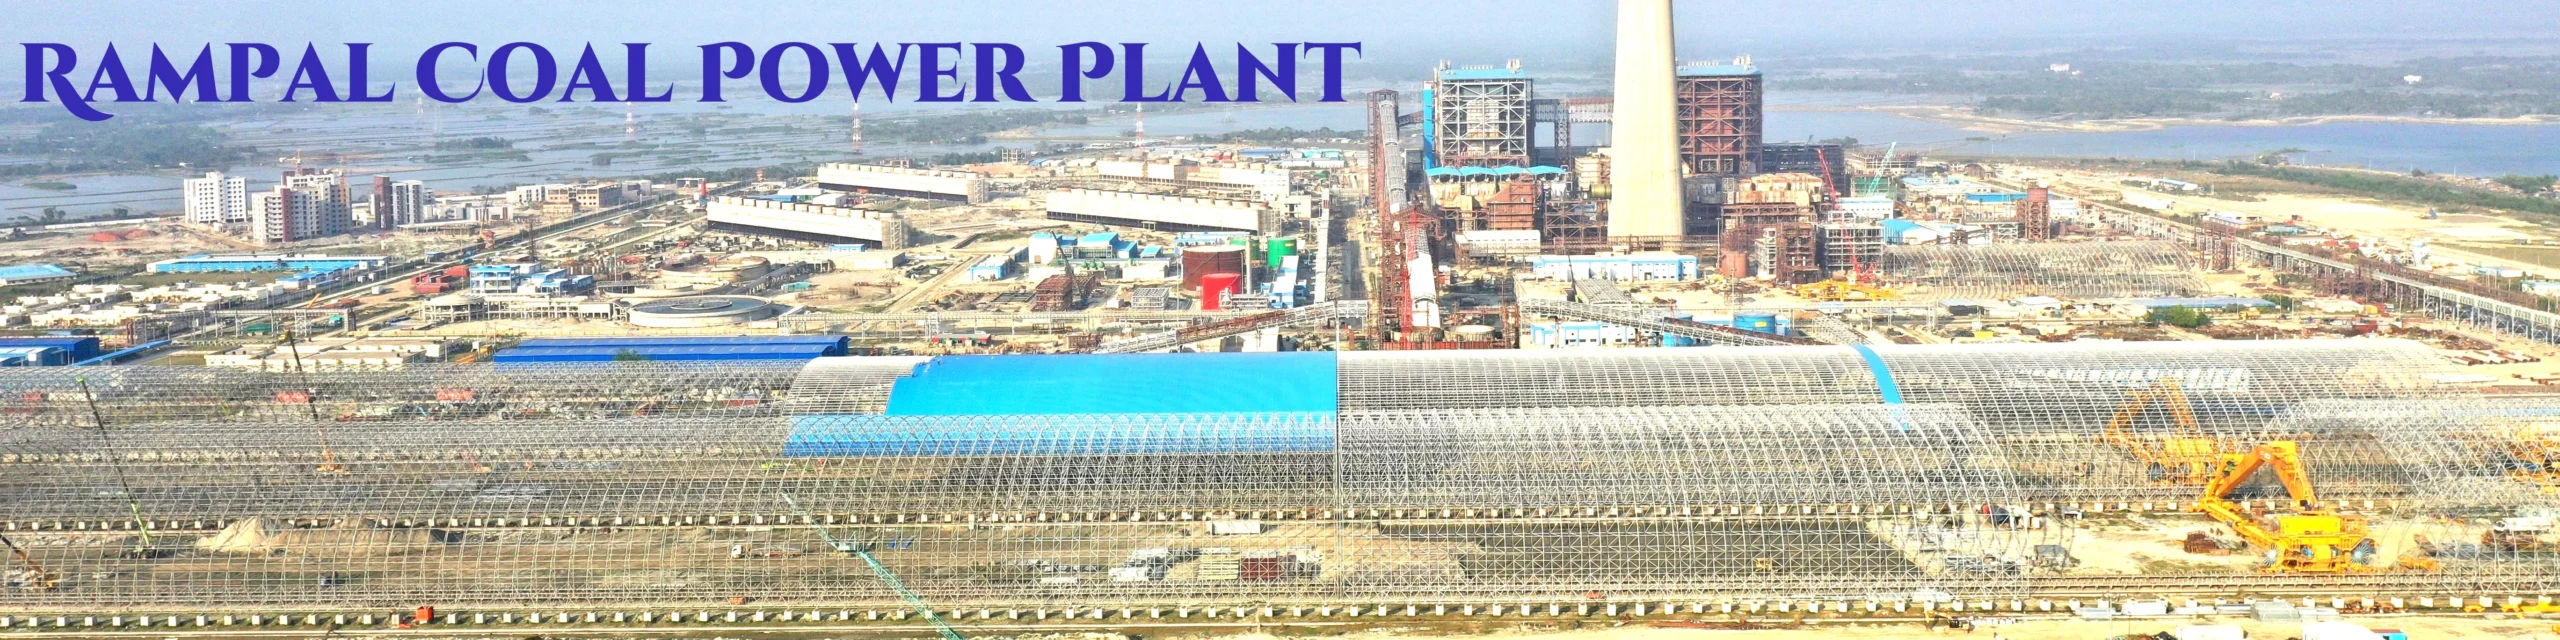 Rampal Coal Power Plant